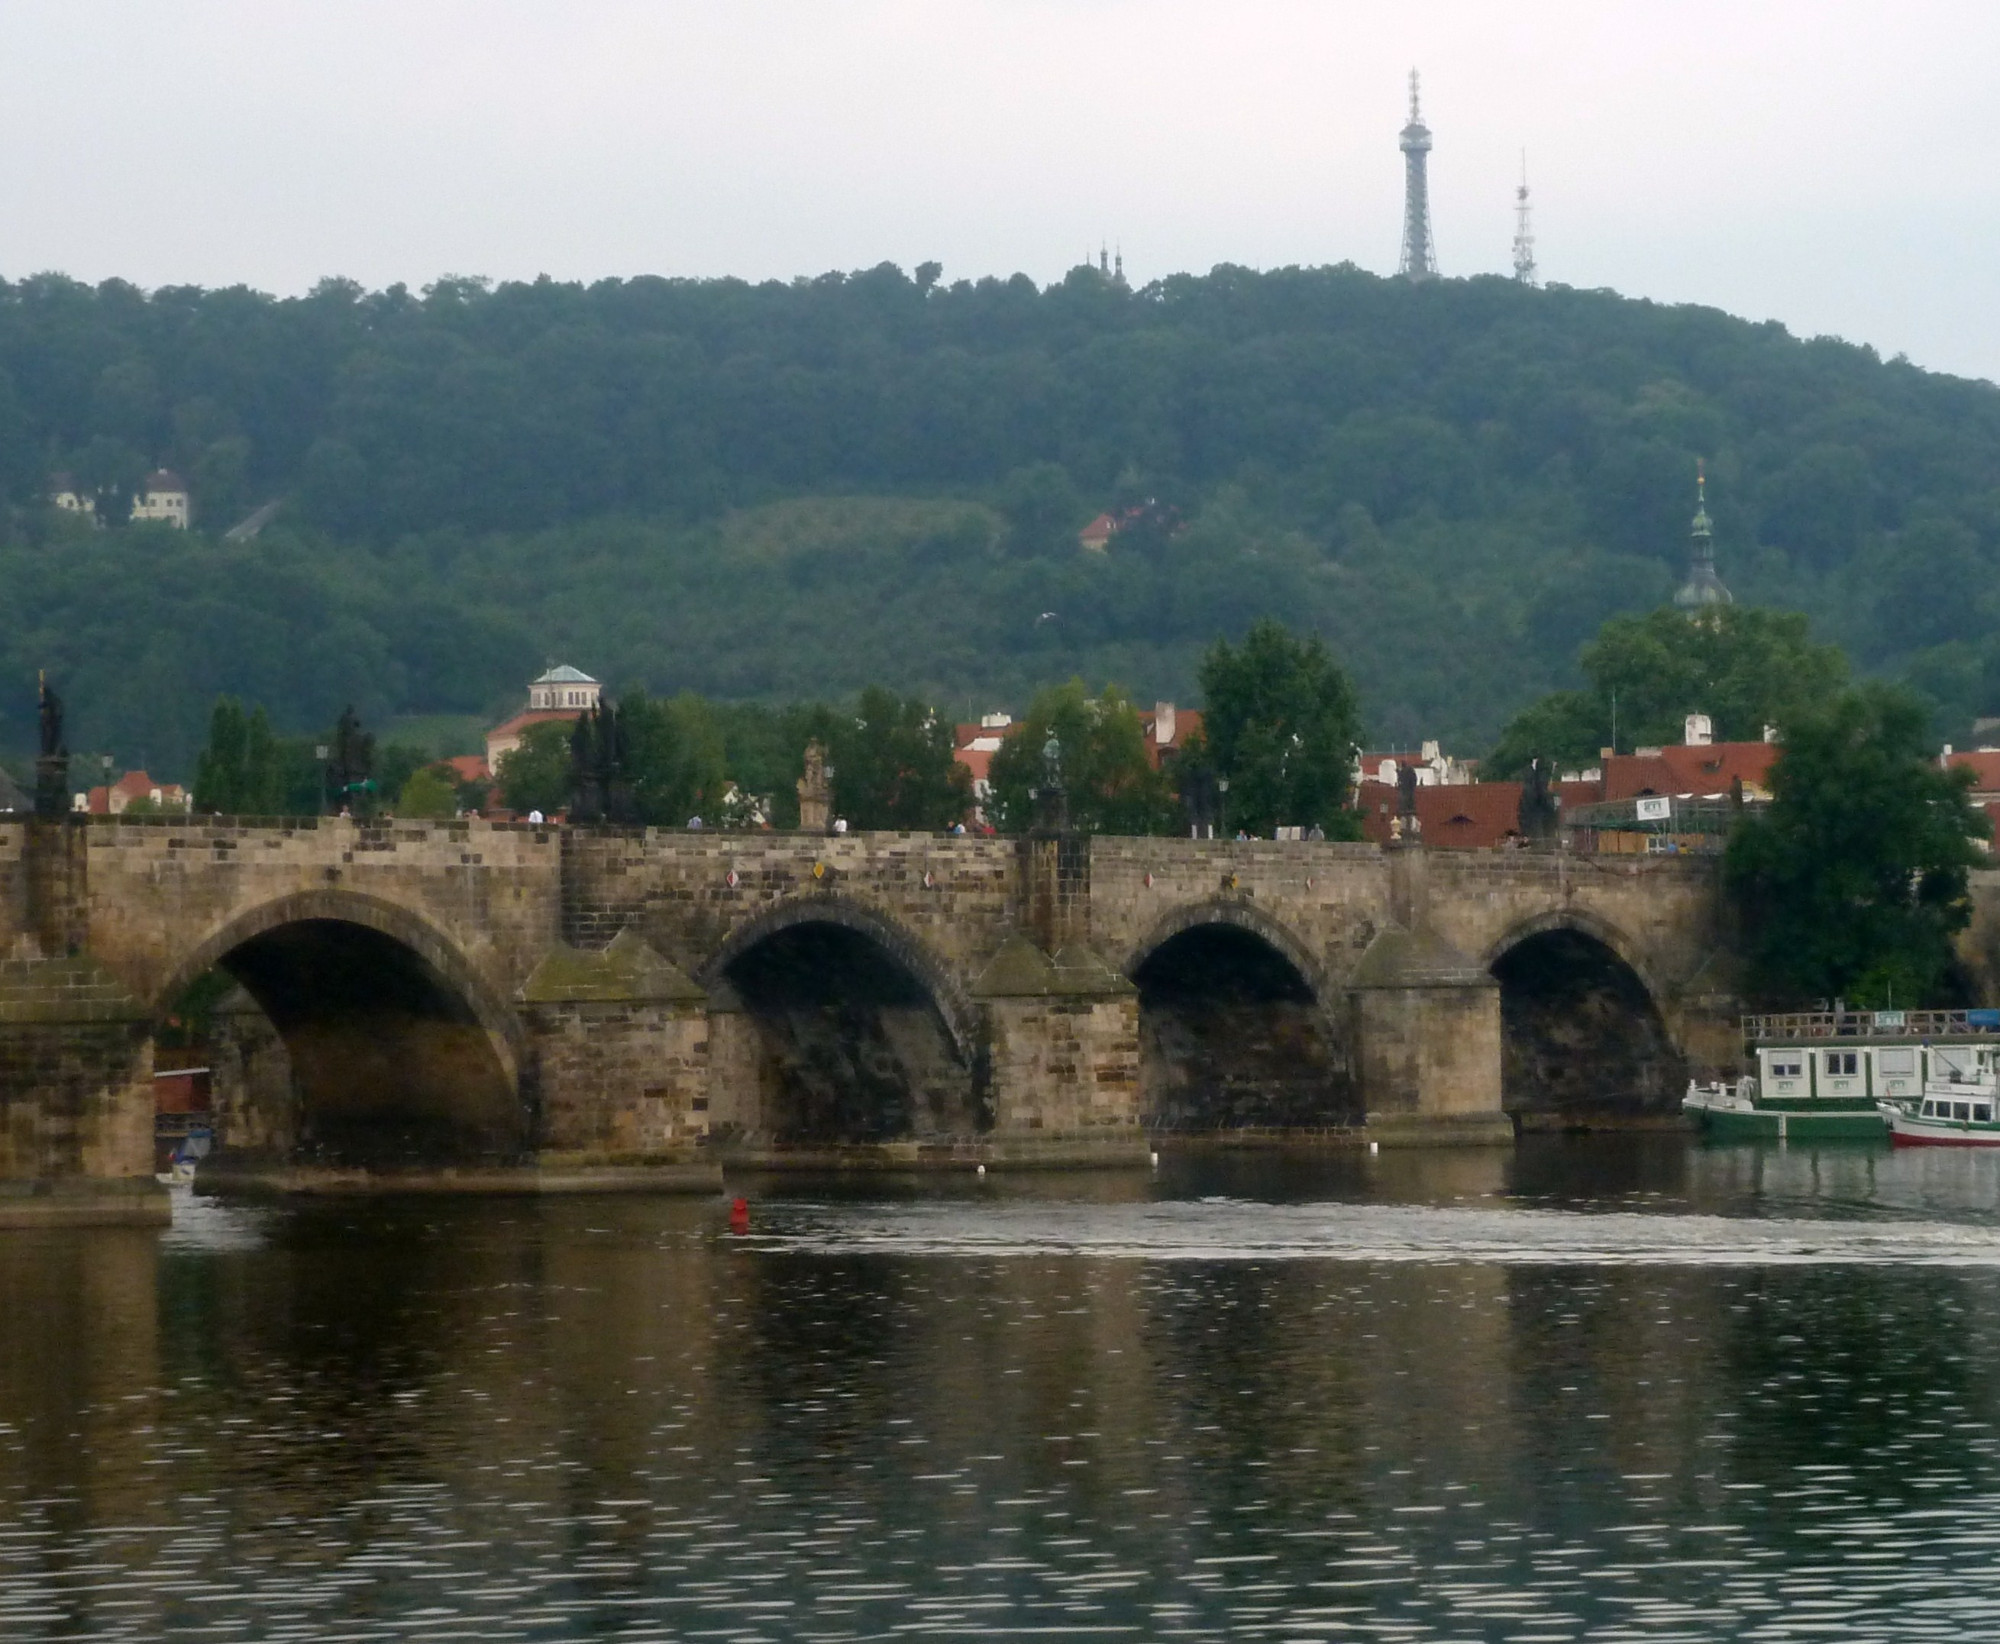 Bridge Viewed from river bank